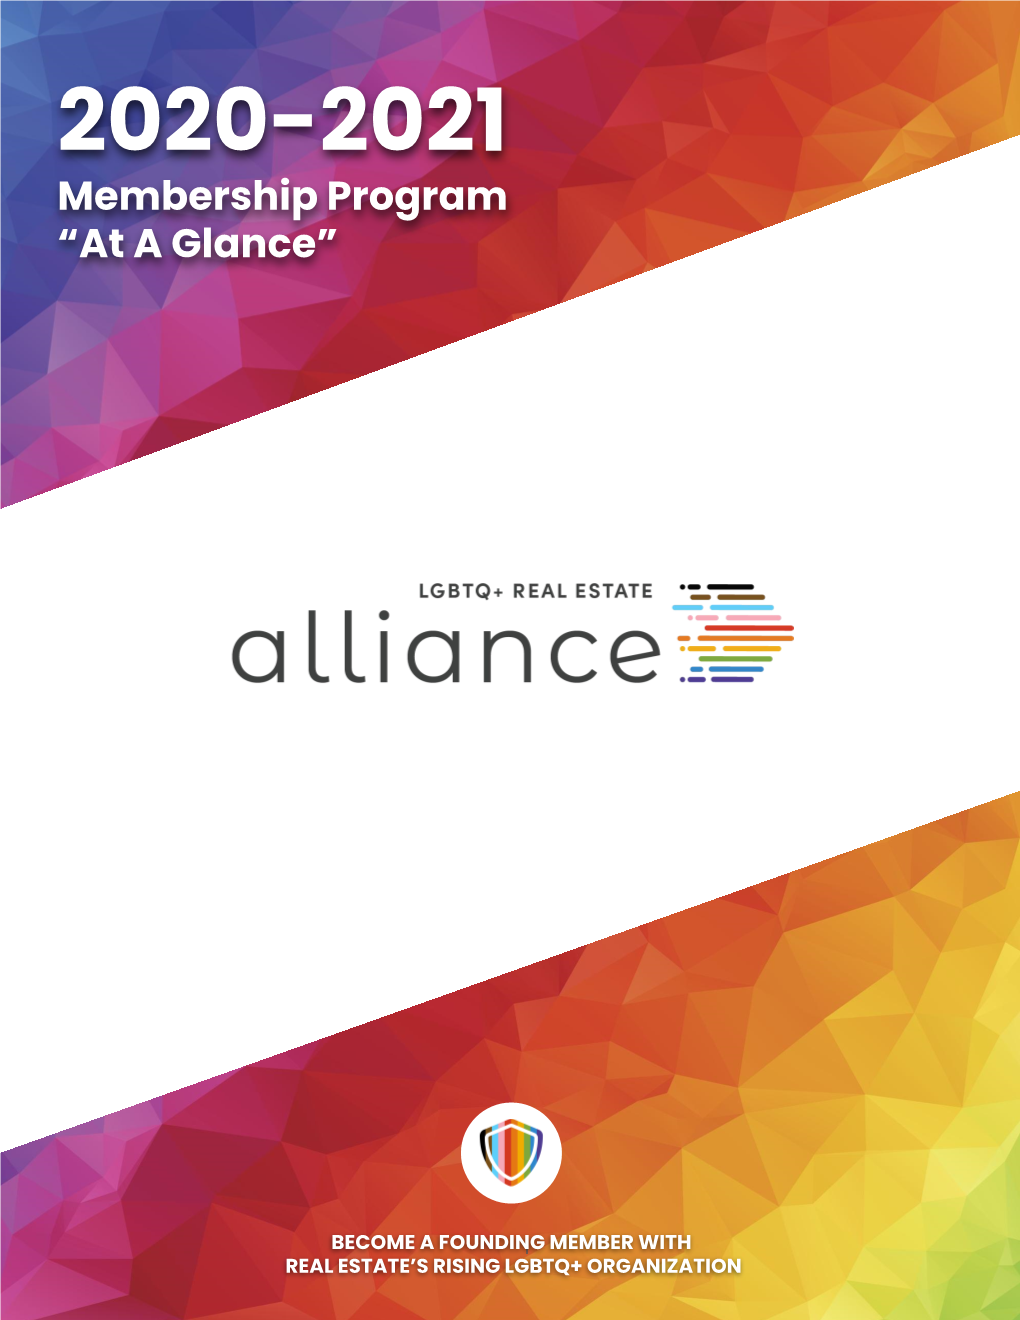 2020-2021 Membership Program “At a Glance”